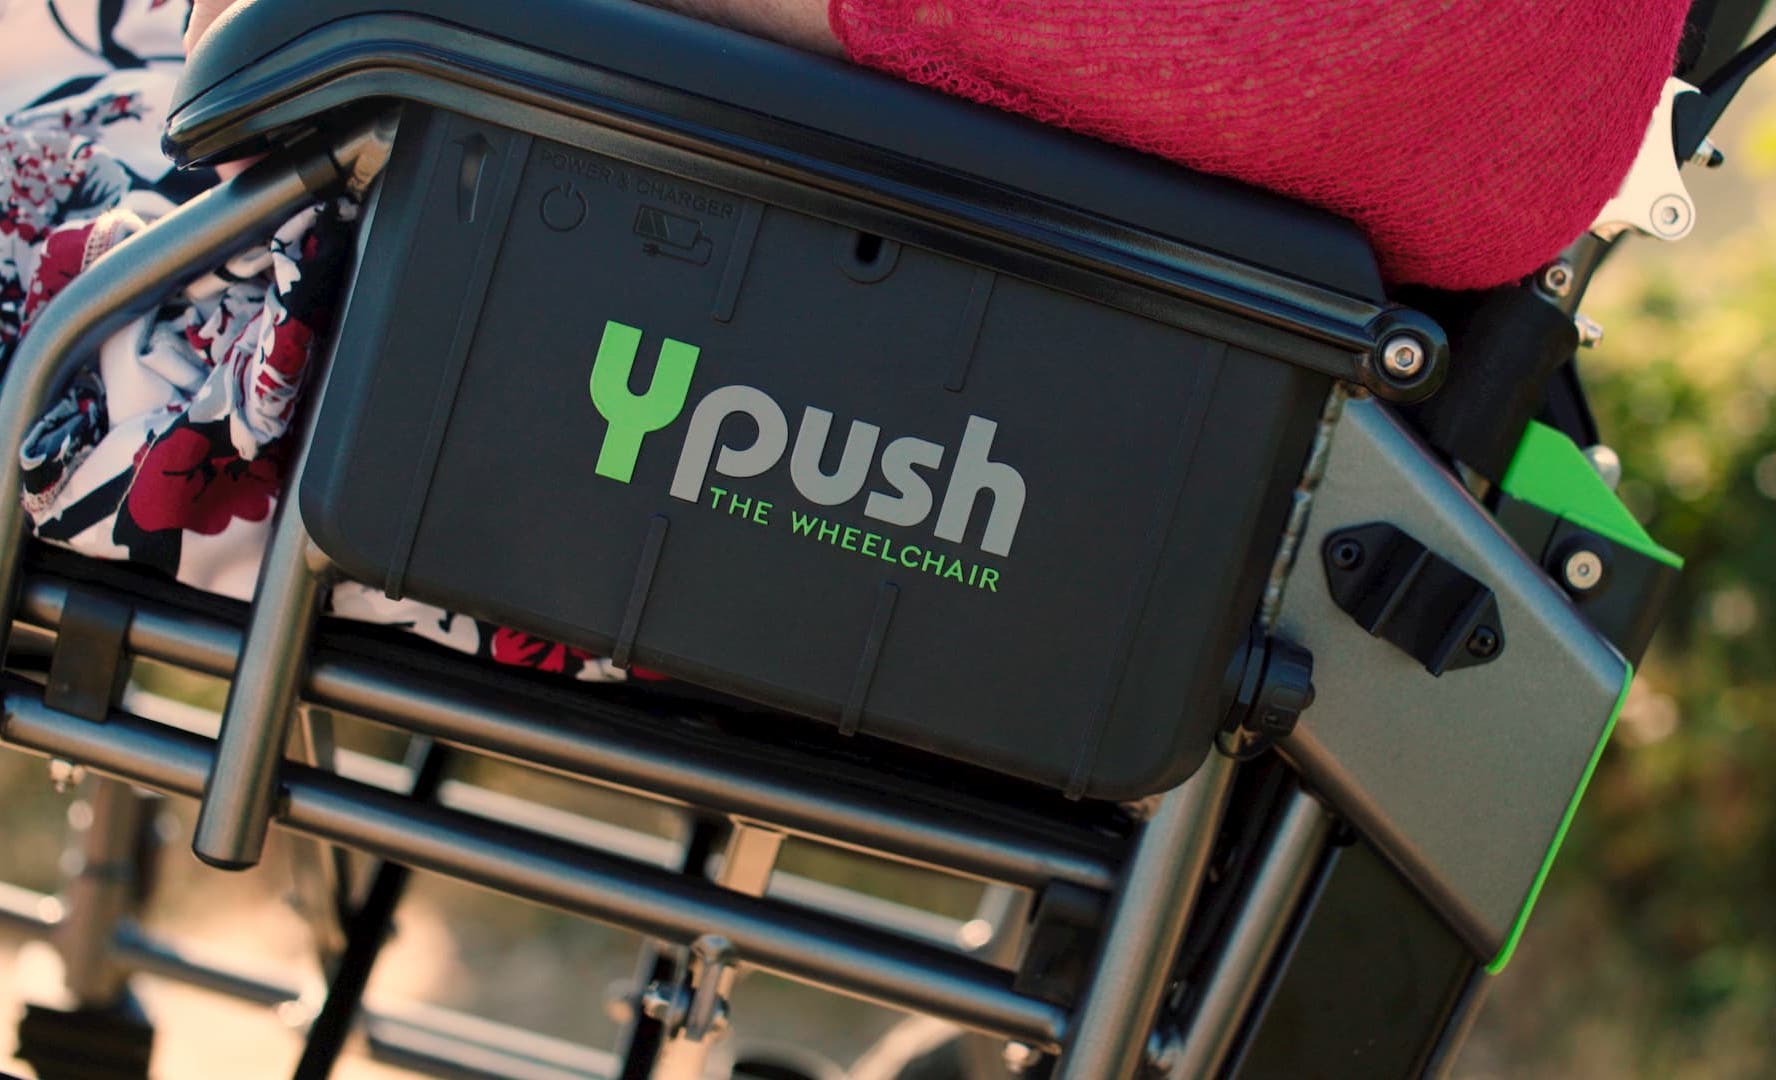 YPush Wheelchair